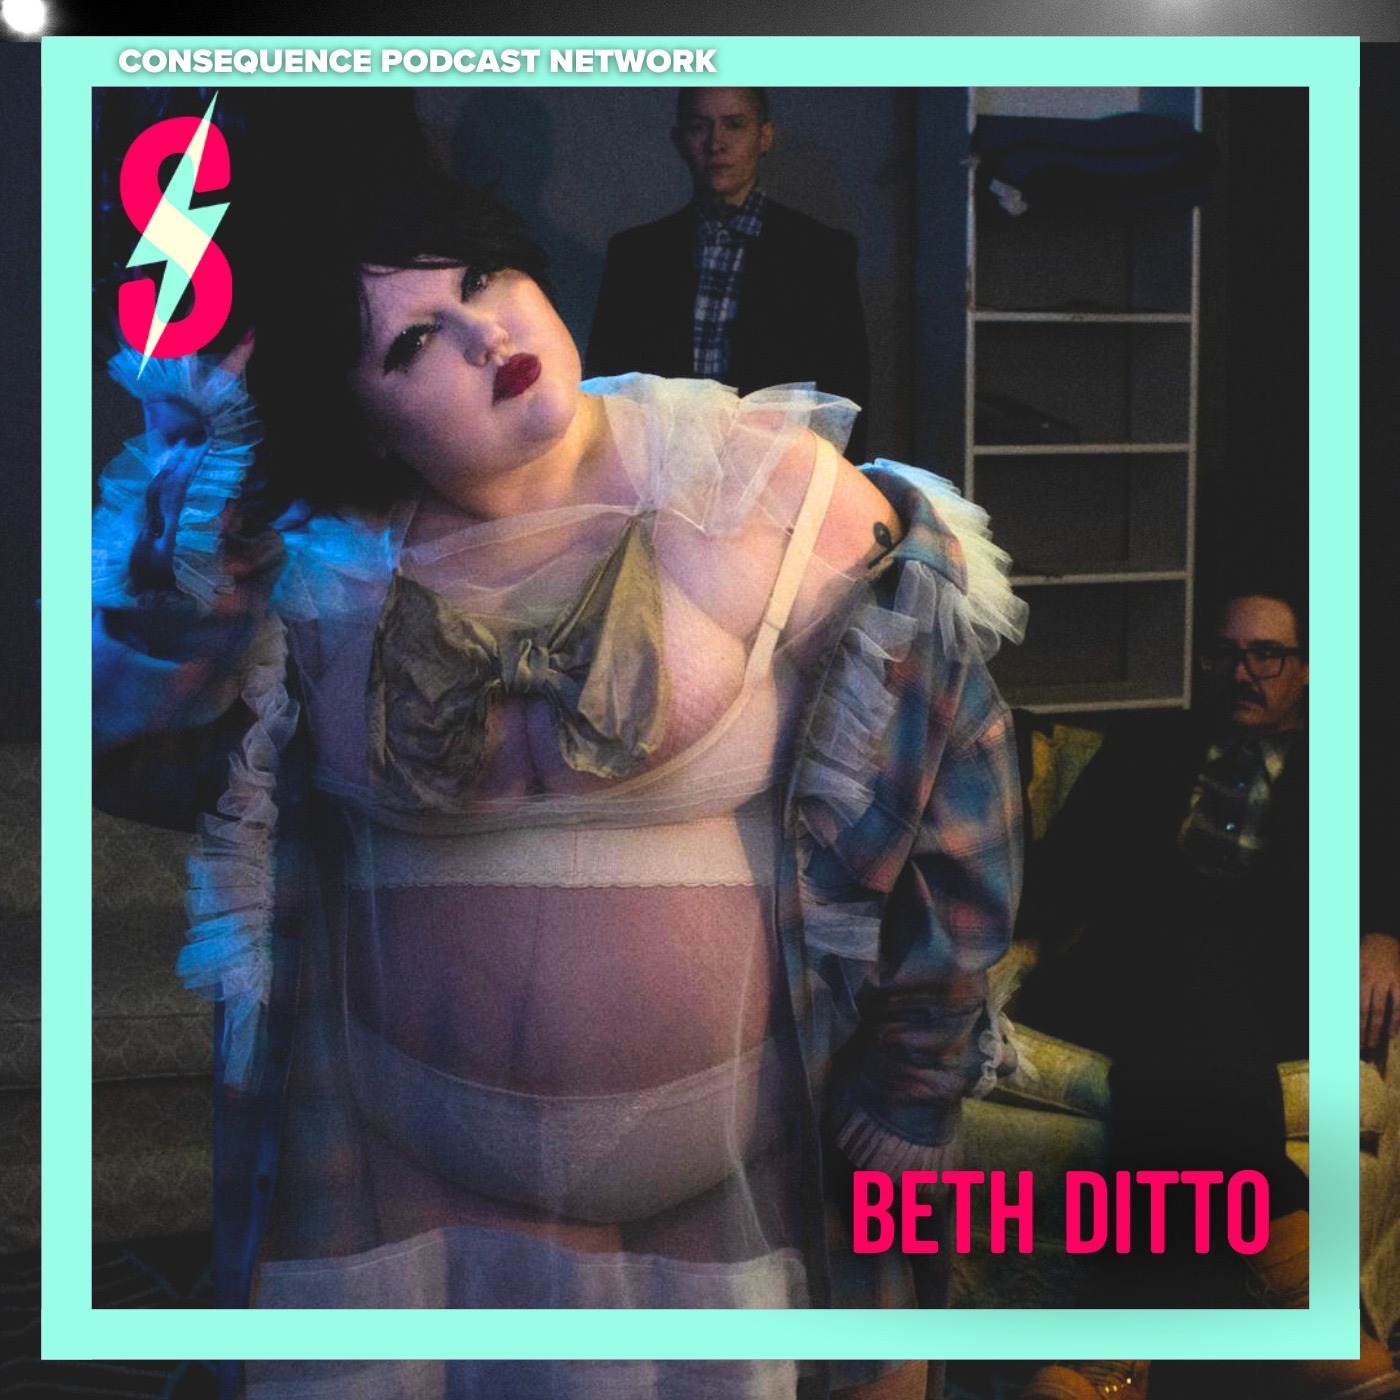 Beth Ditto's Spark is Missy Elliott's Da Real World